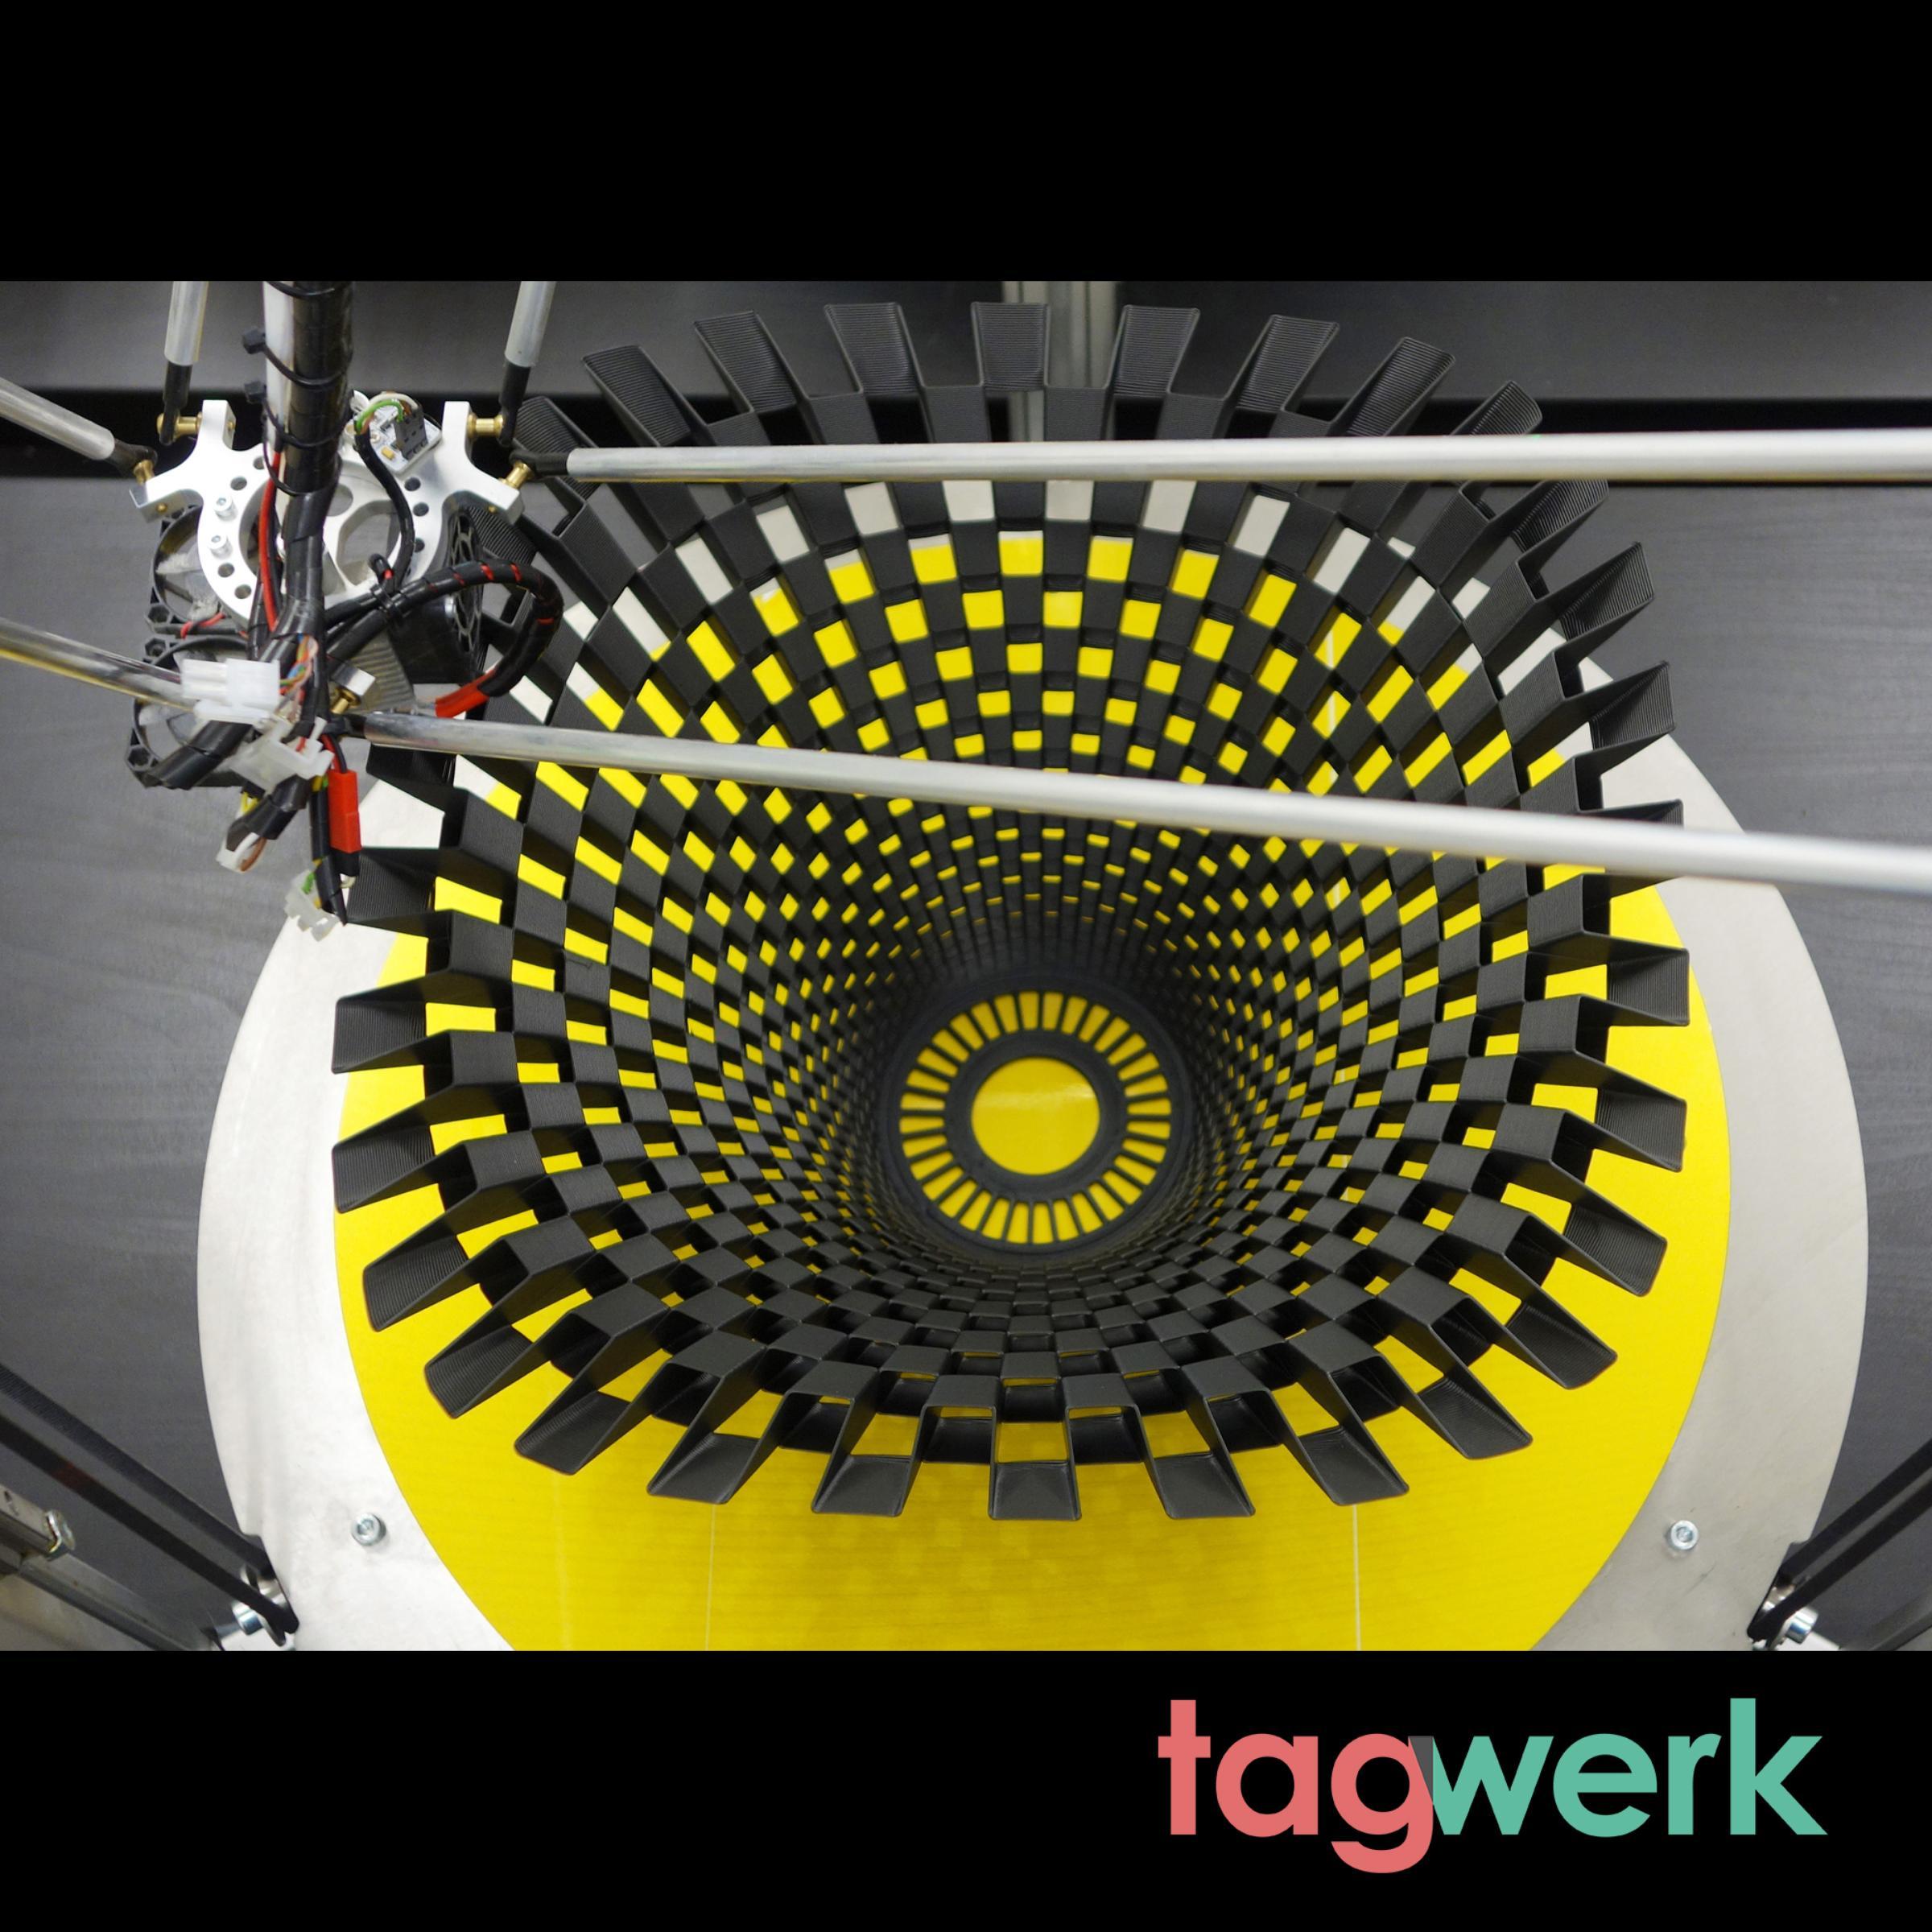 Tagwerk Designs - Lamps from the 3D printer